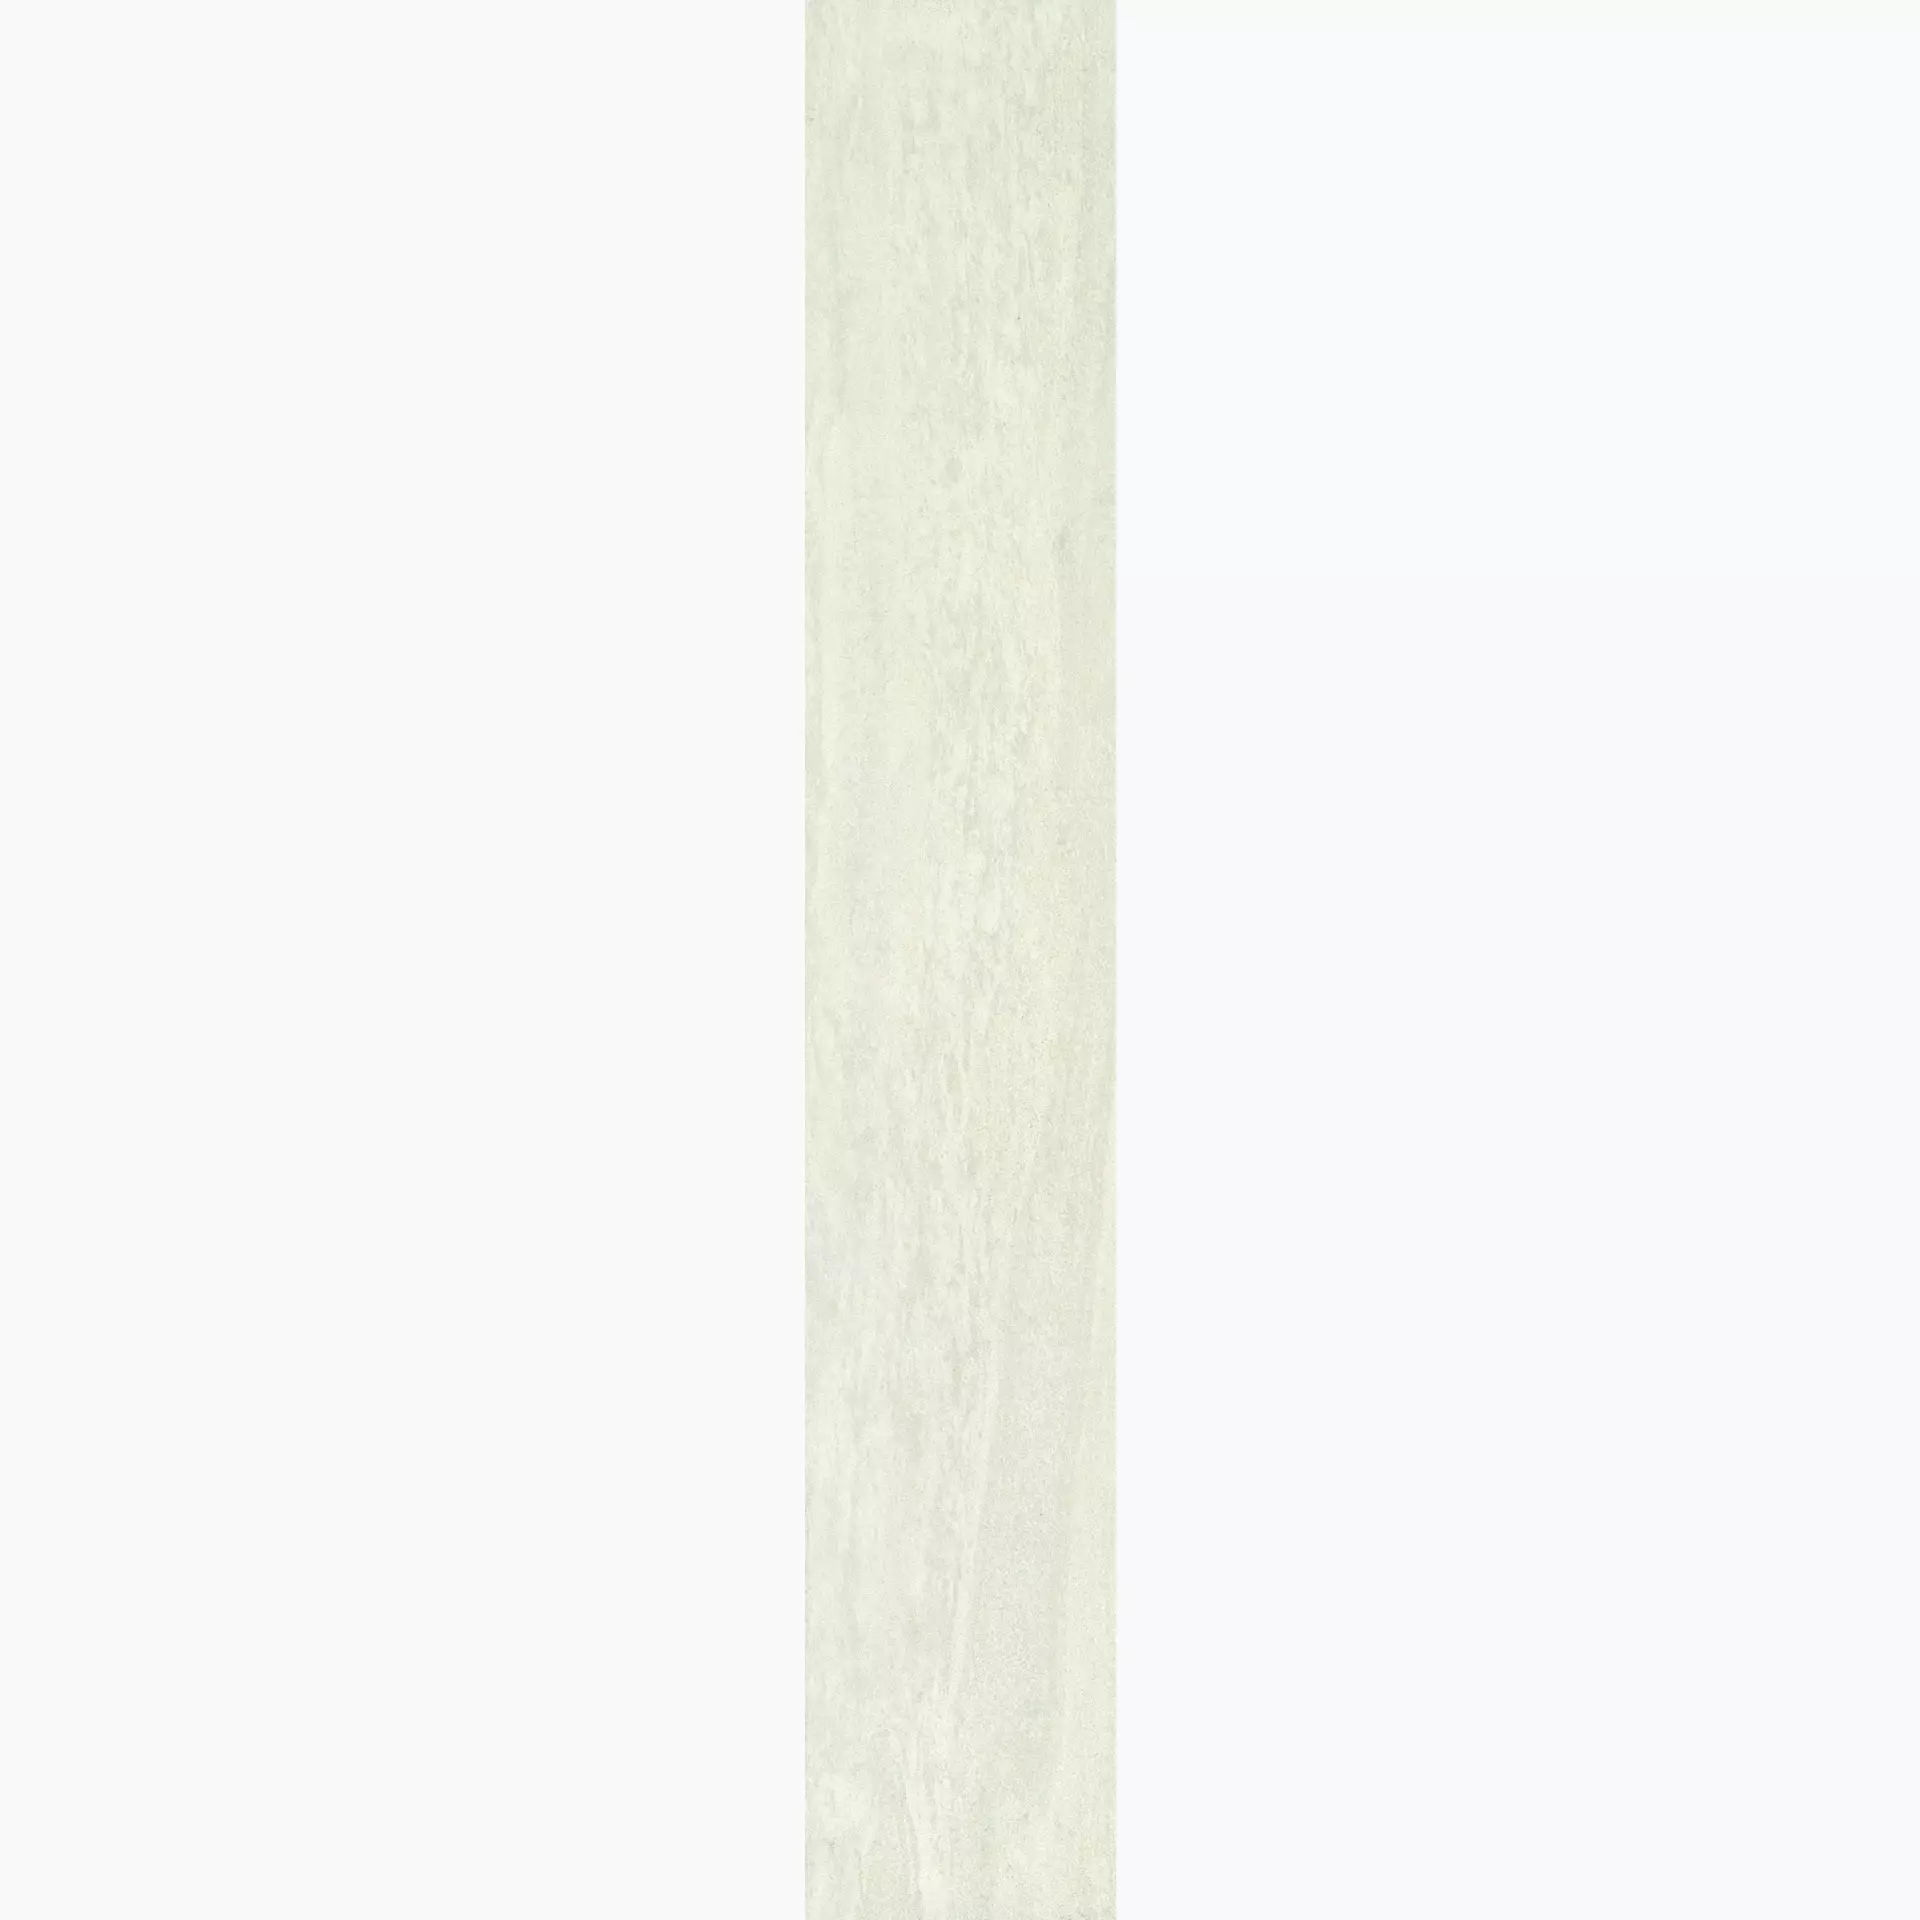 Ergon Stone Project White Naturale Falda E1GJ 20x120cm rectified 9,5mm